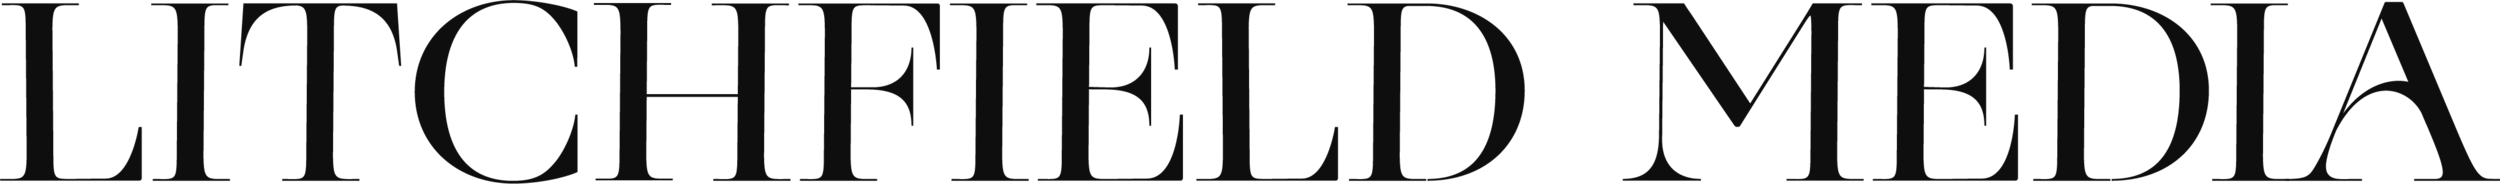 Main Logo01.png